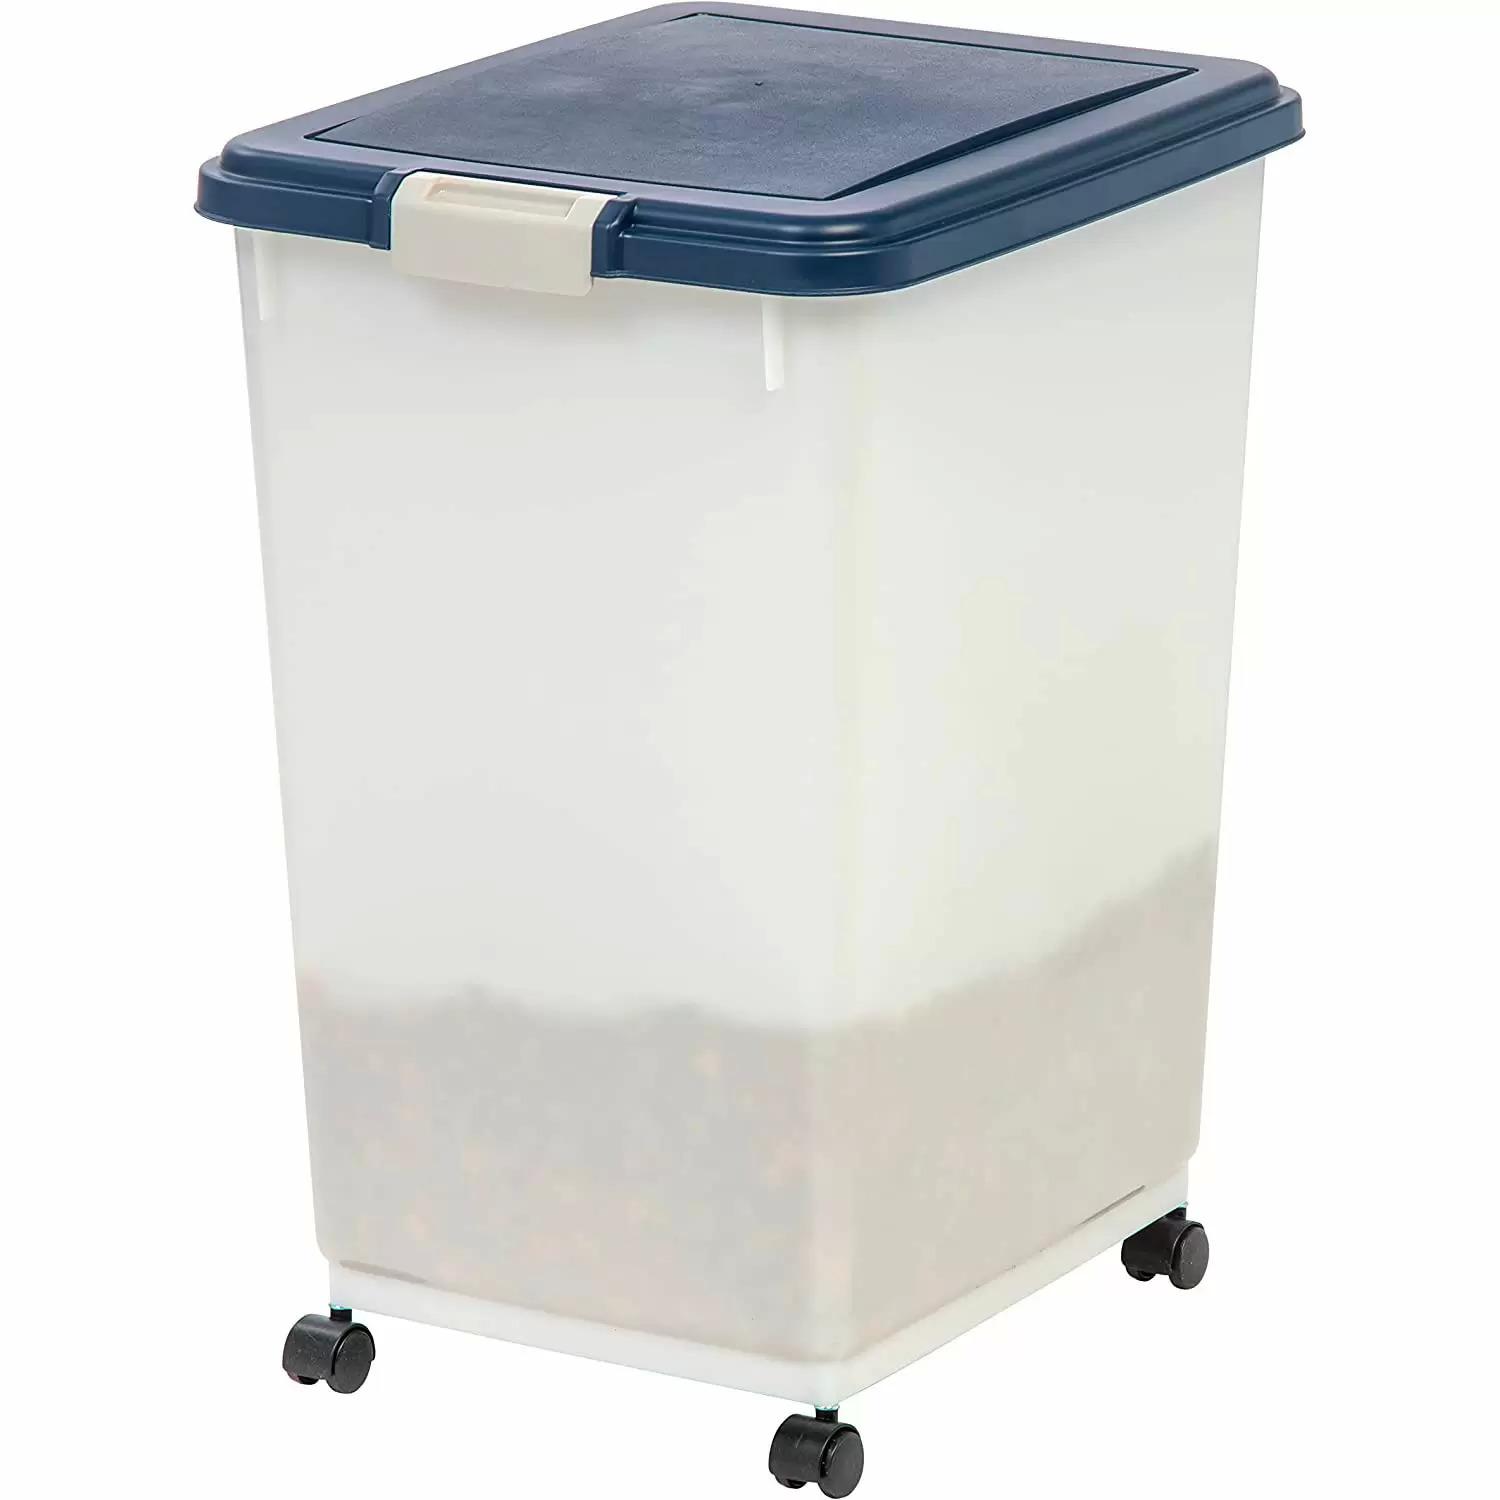 IRIS USA WeatherPro Airtight Pet Food Storage Container for $18.49